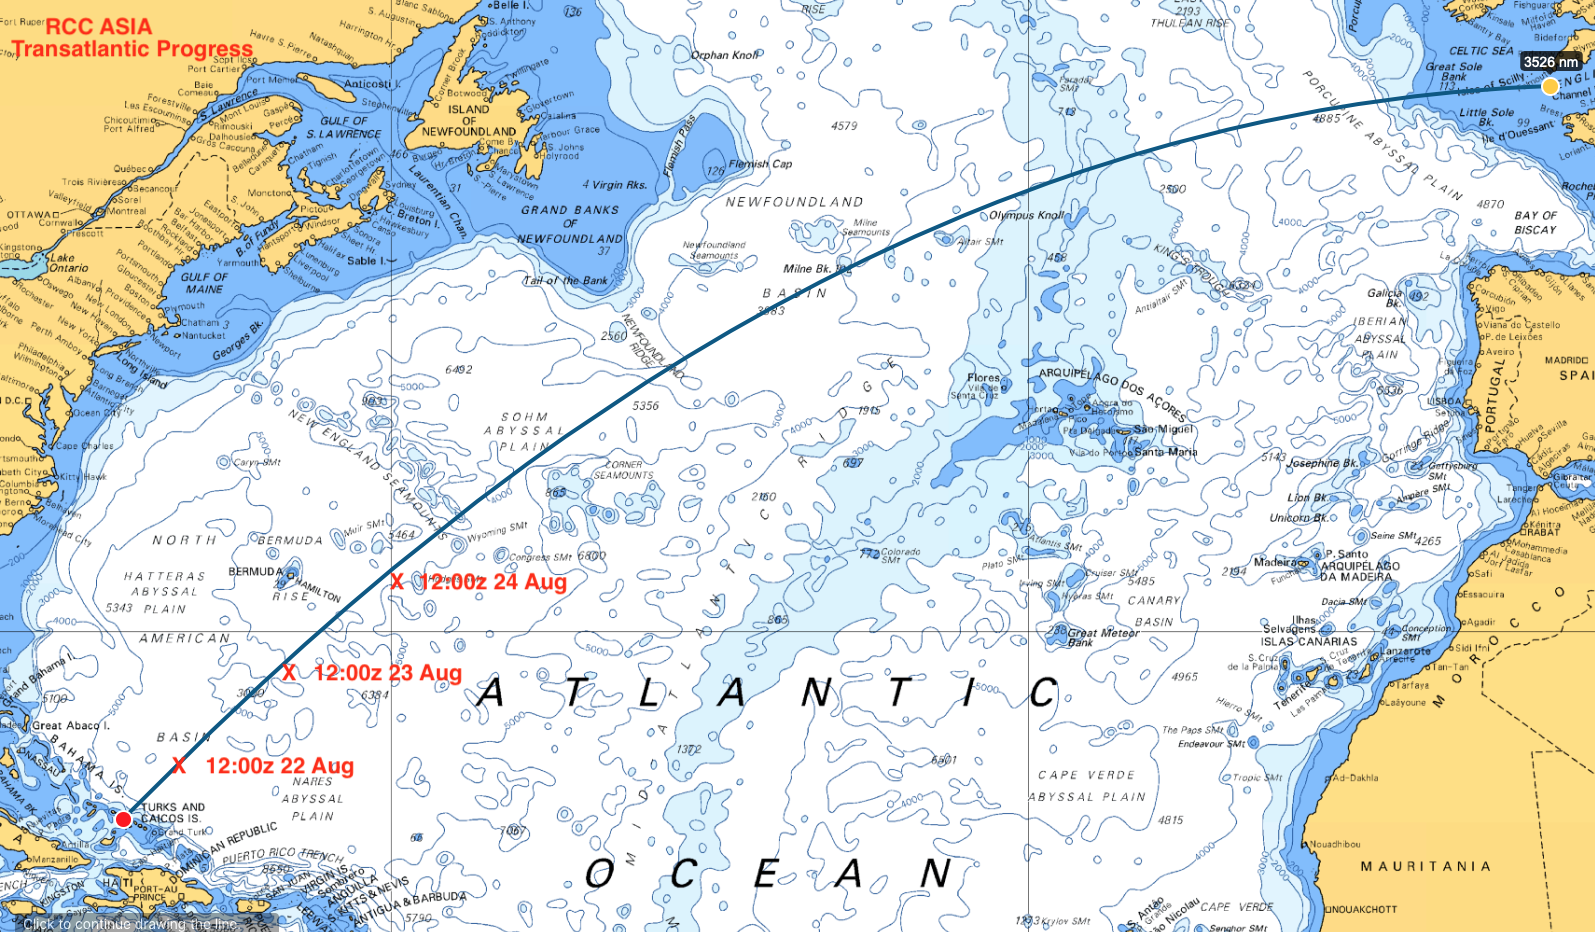 RCC ASIA Atlantic Progress.png